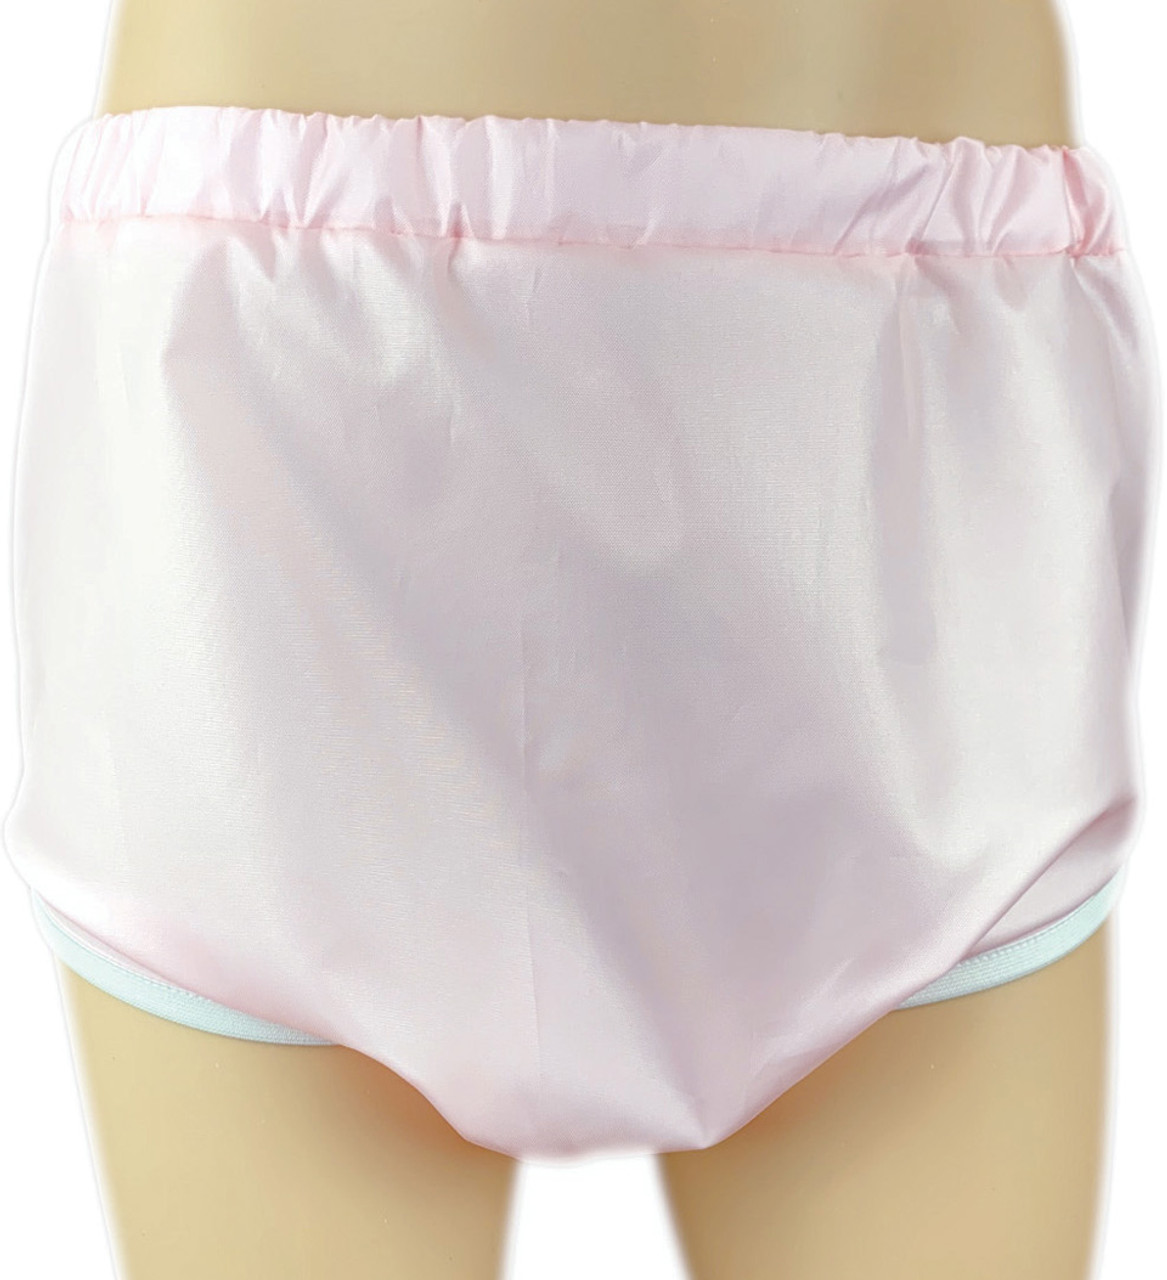 AFDC Super Flex Adult Plastic Pants Angel Fluff Diapers